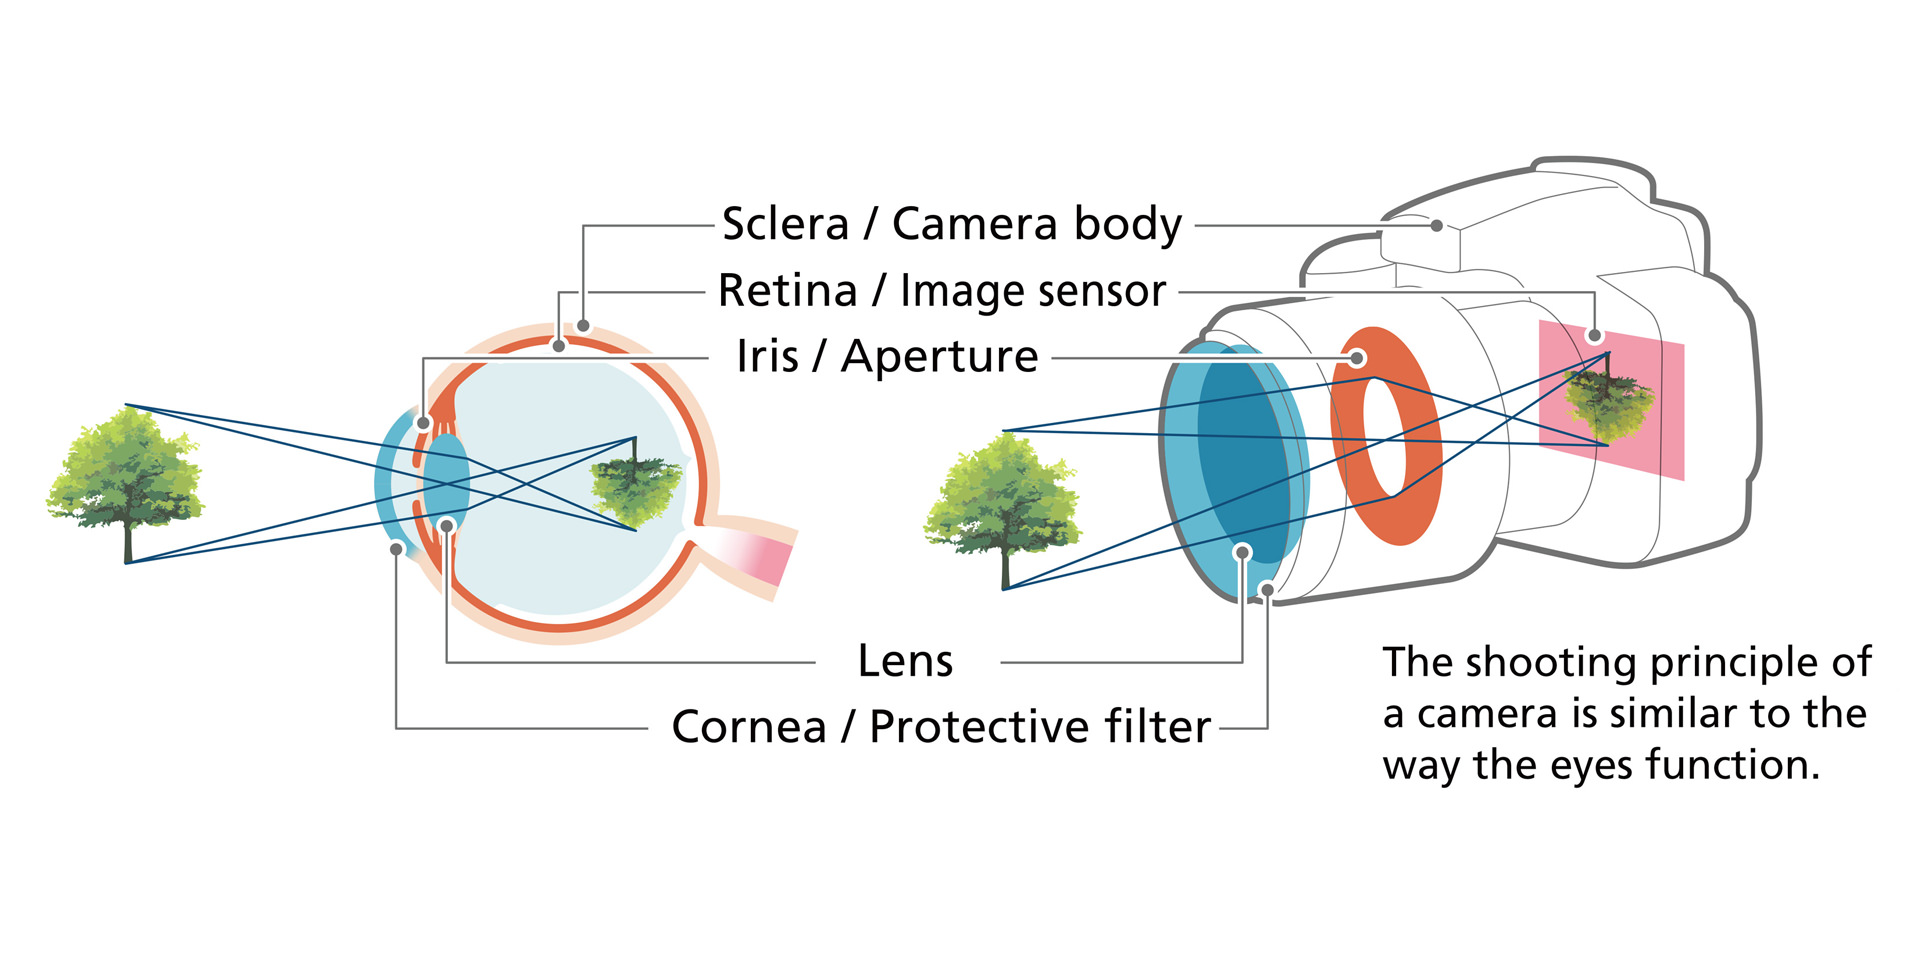 Sclera / Camera body Retina/Image sensor Iris/Aperture Lens Cornea/Protective filter The shooting principle of a camera is similar to the way the eyes function.